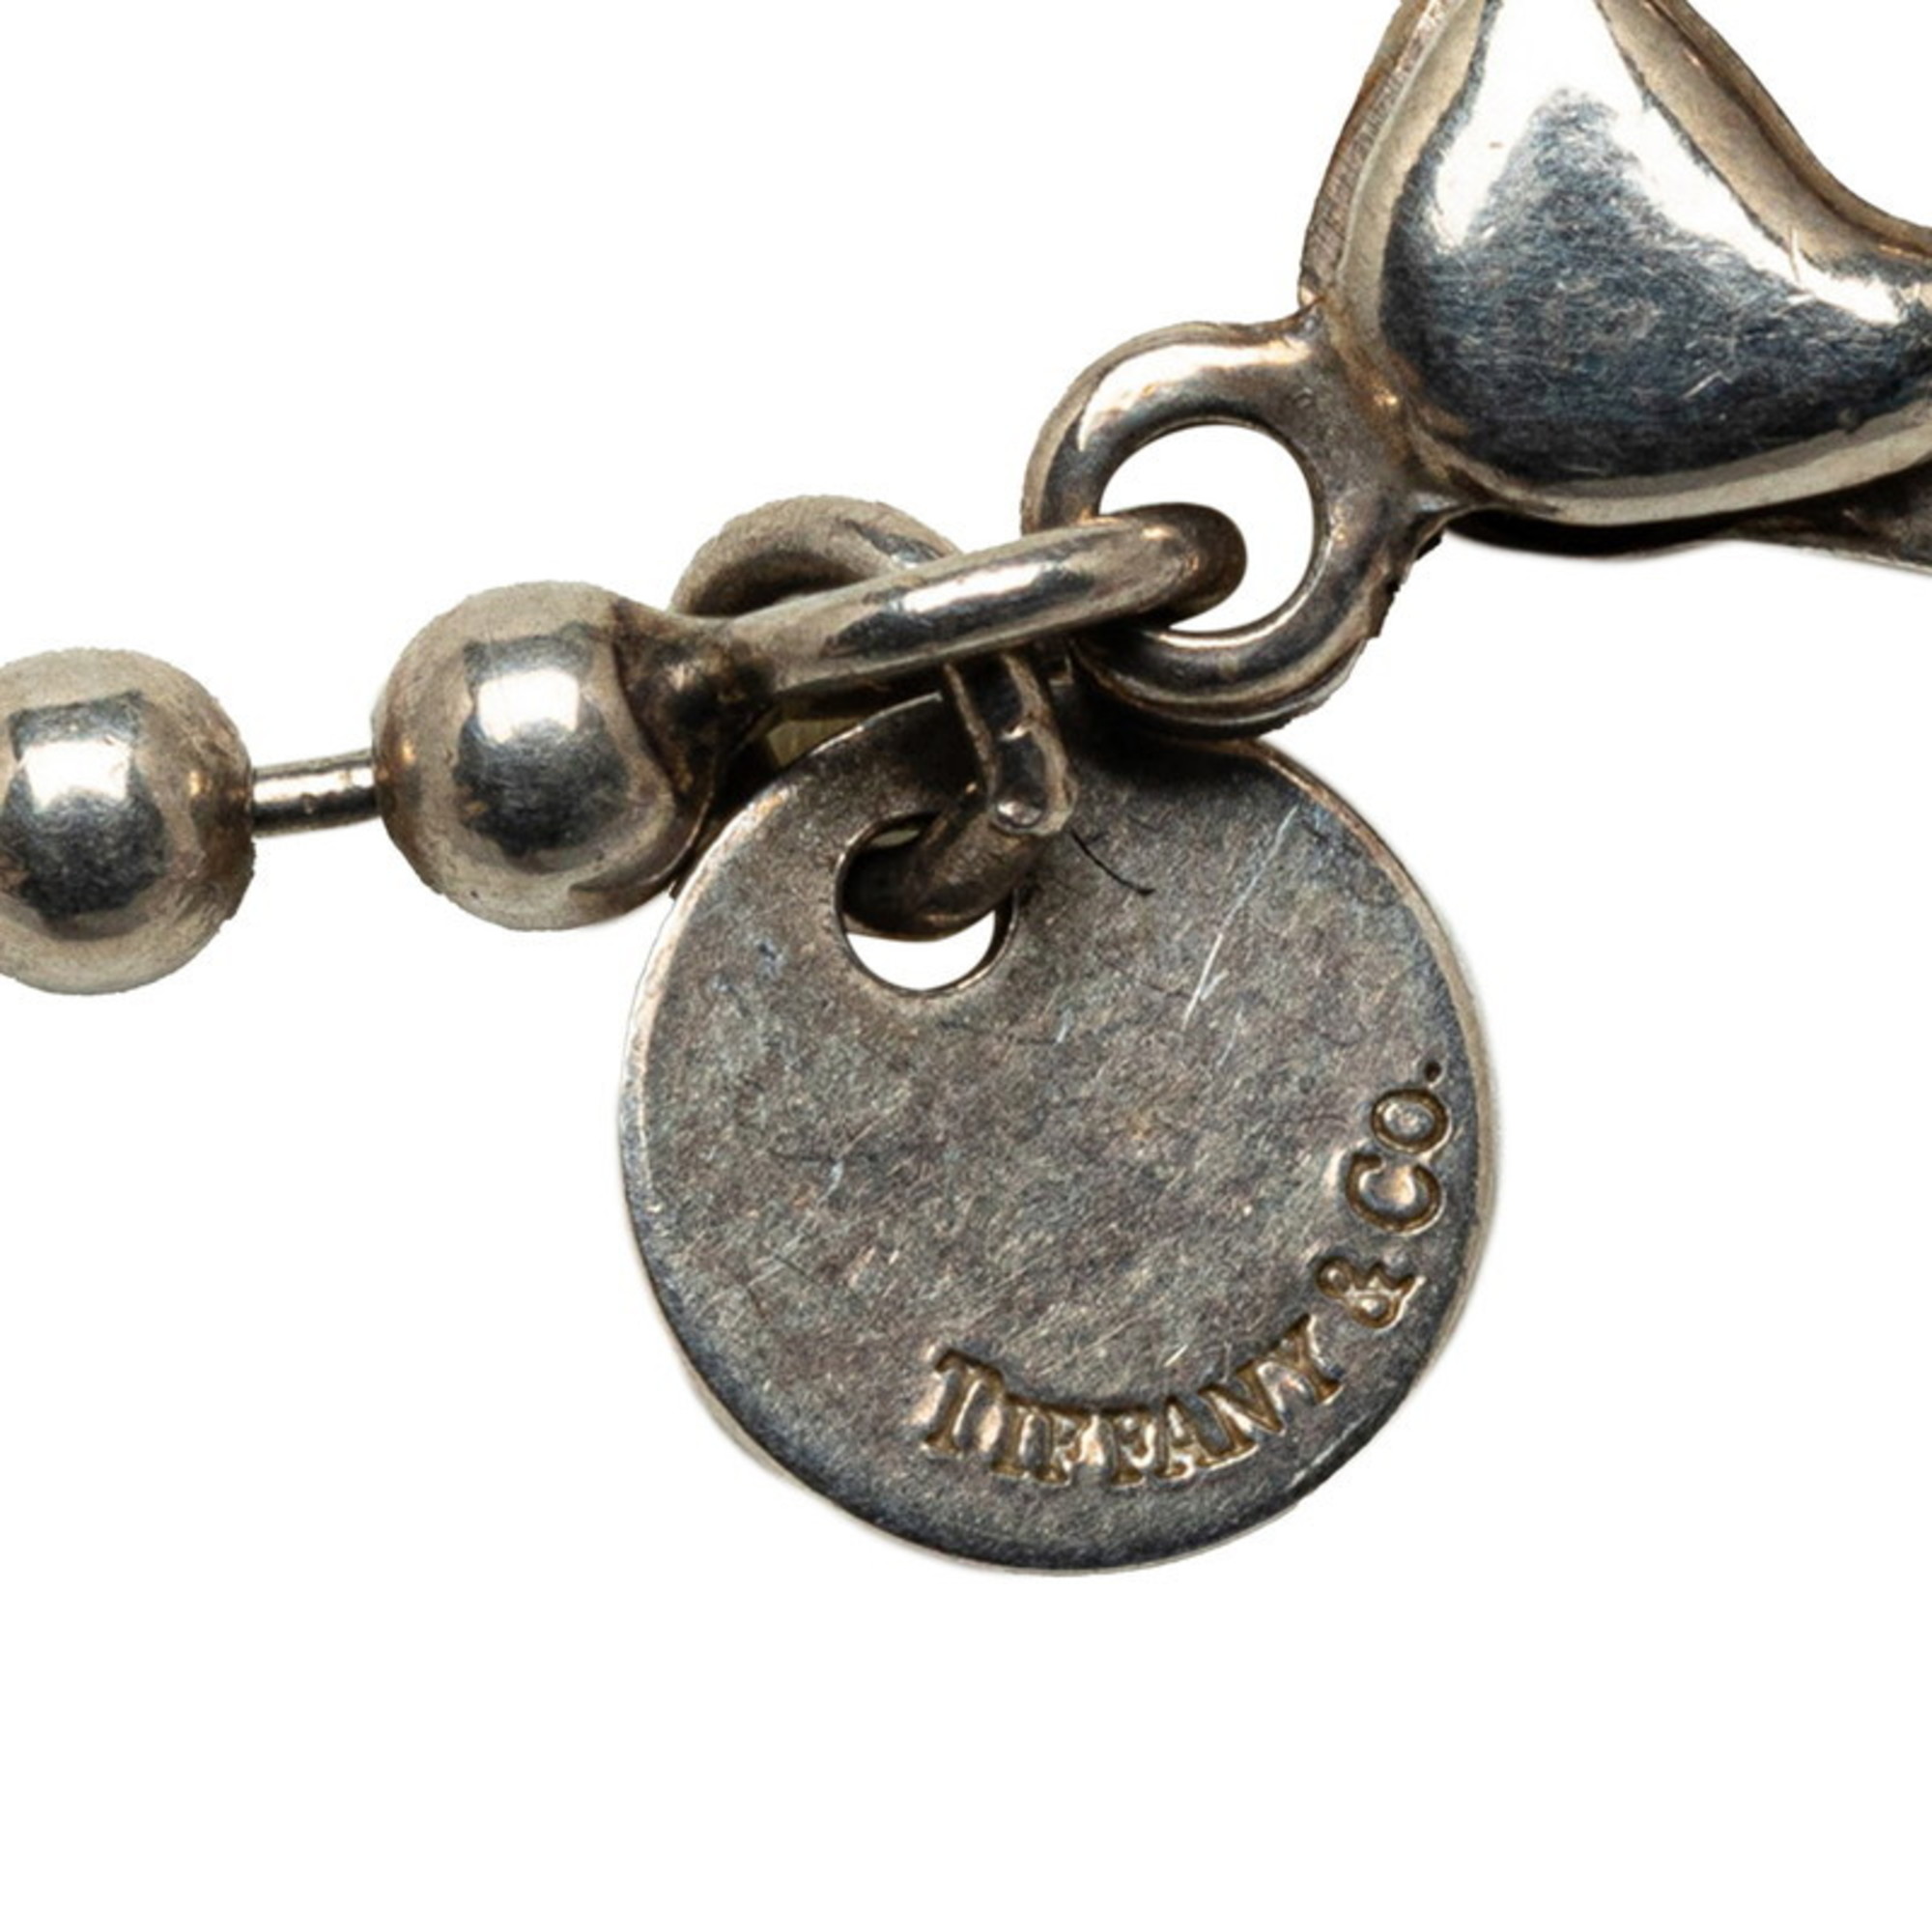 Tiffany Notes Heart Ball Chain Necklace Silver SV925 Women's TIFFANY&Co.